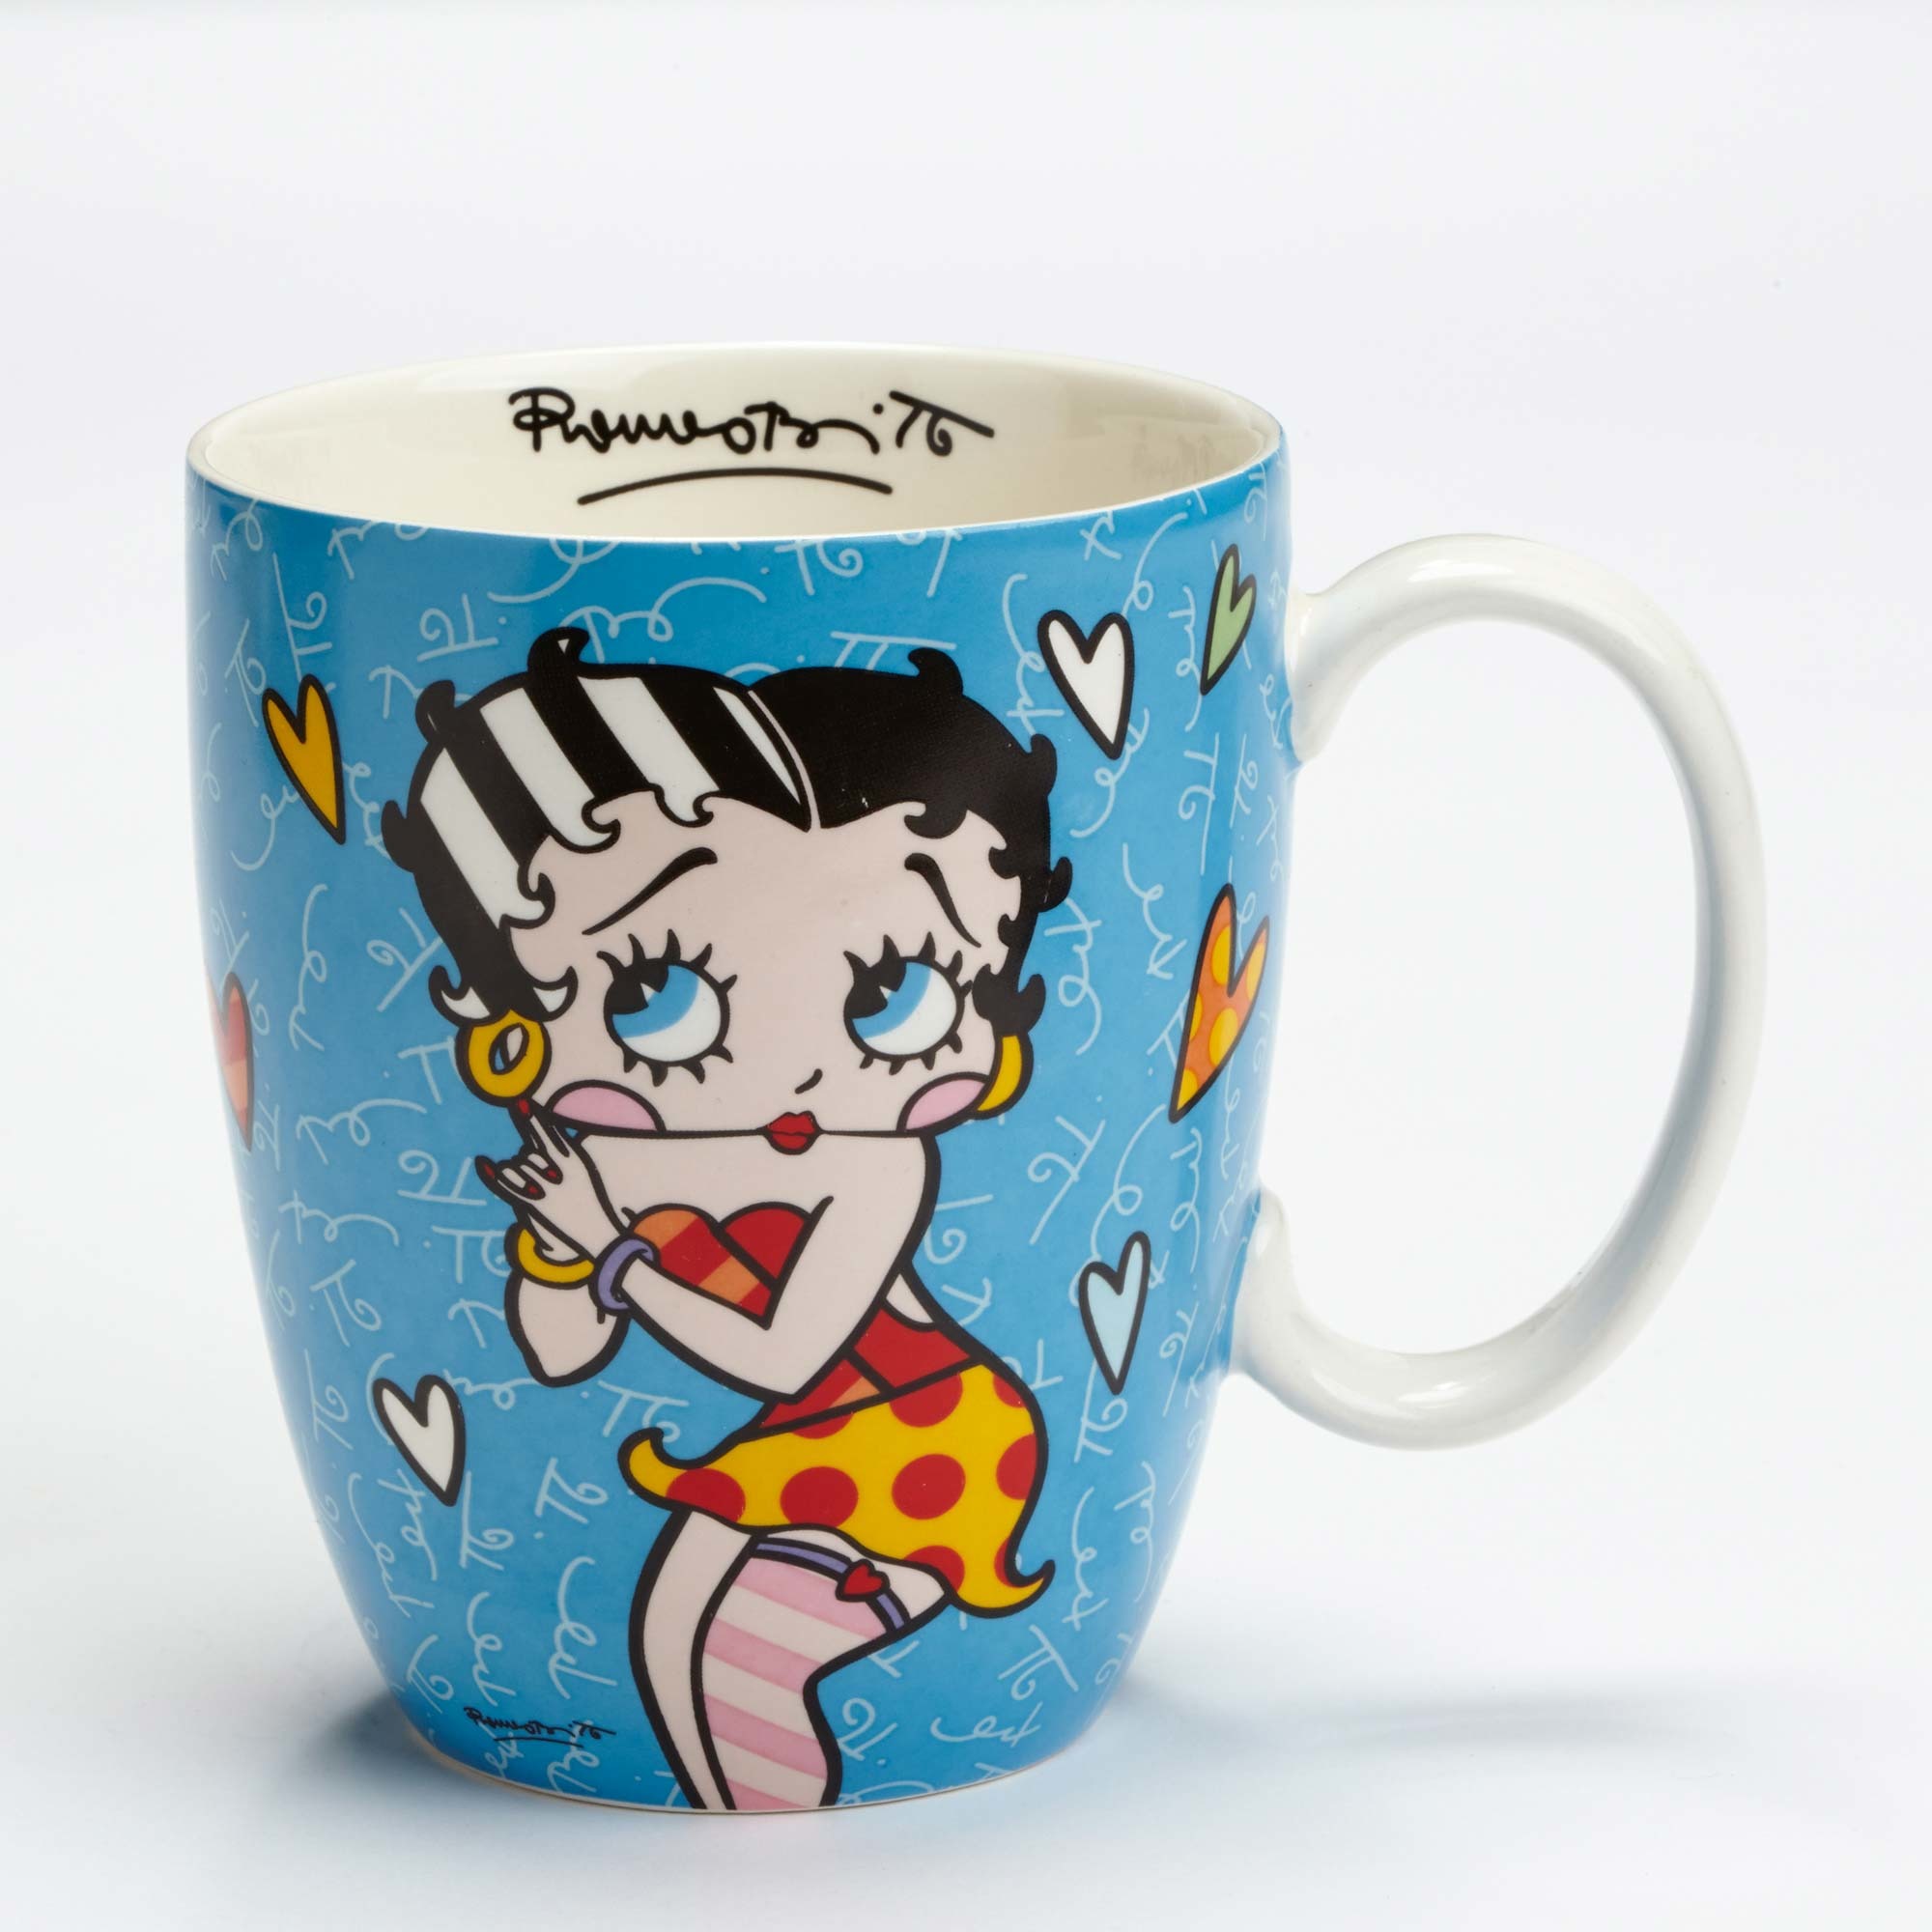 Betty Boop Mug, Unique Artist Gift